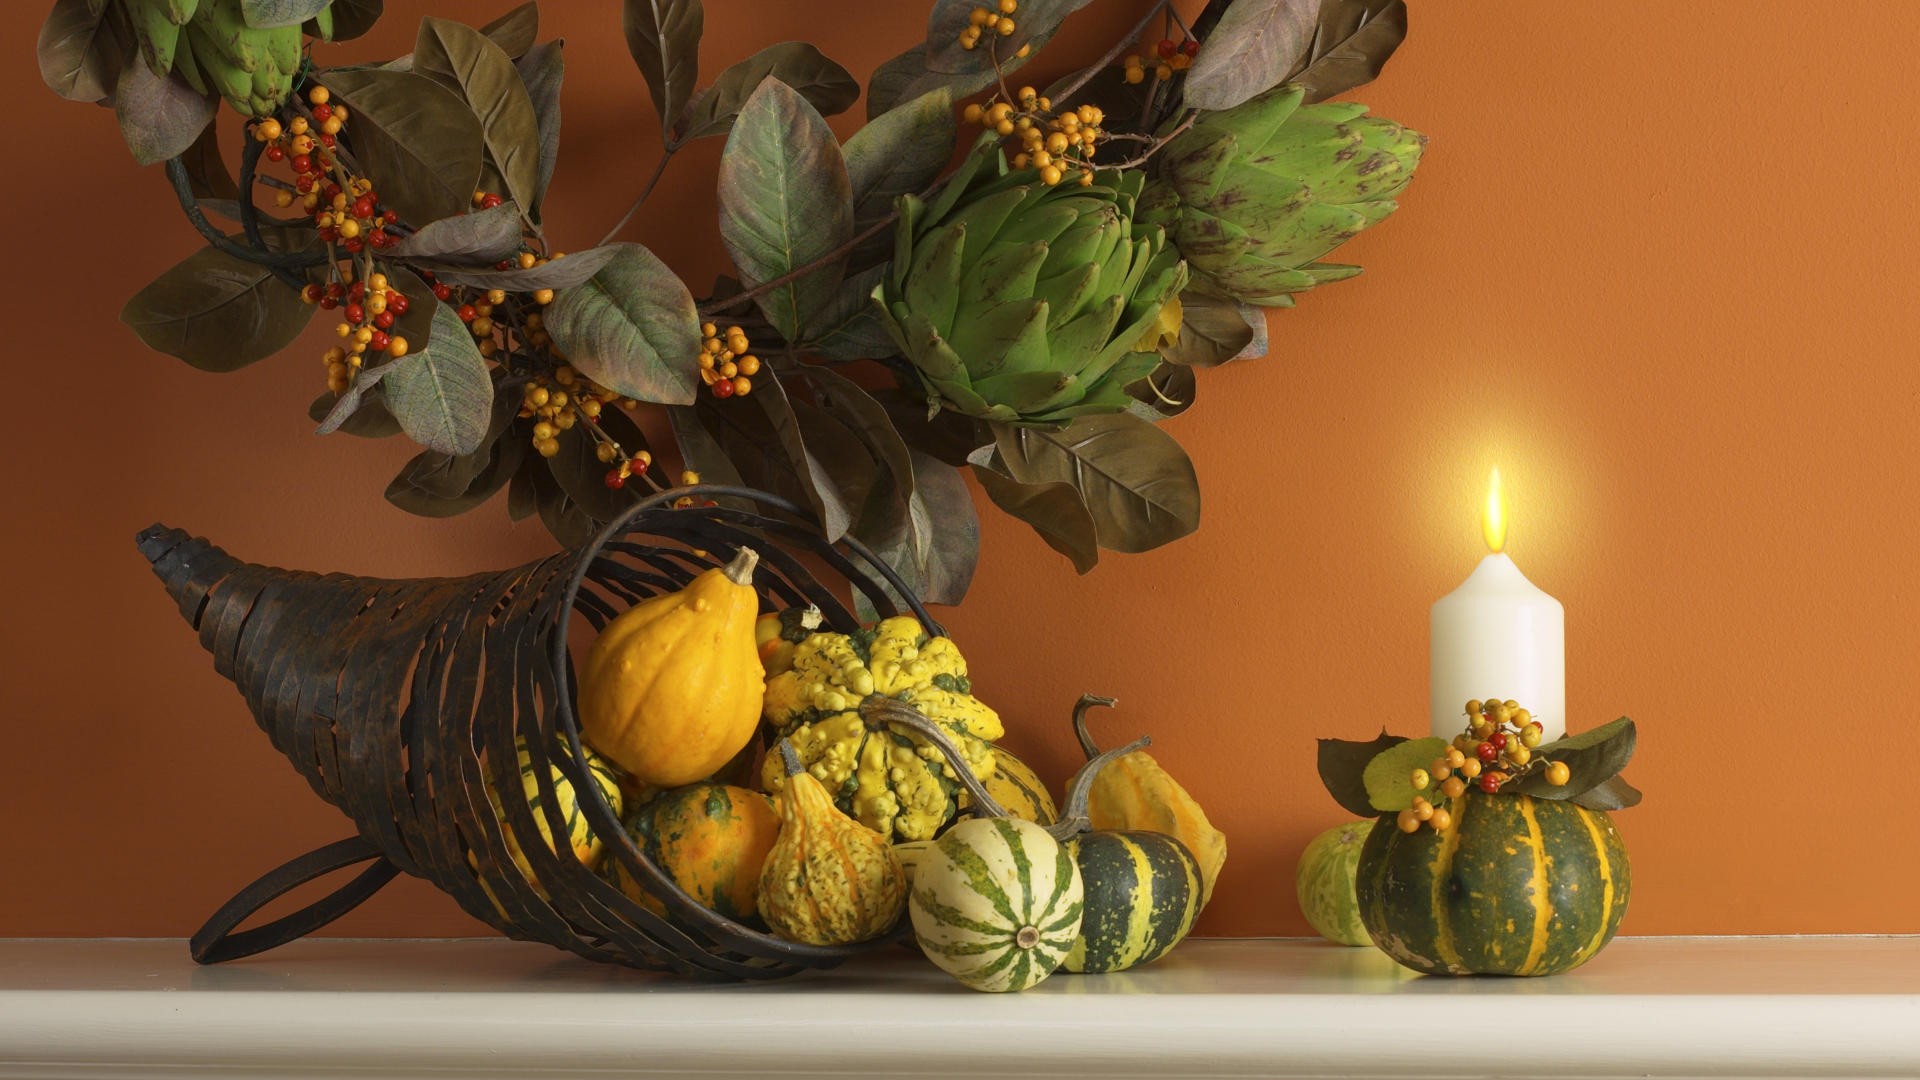 free thanksgiving wallpaper desktop,winter squash,still life photography,still life,gourd,vegetable